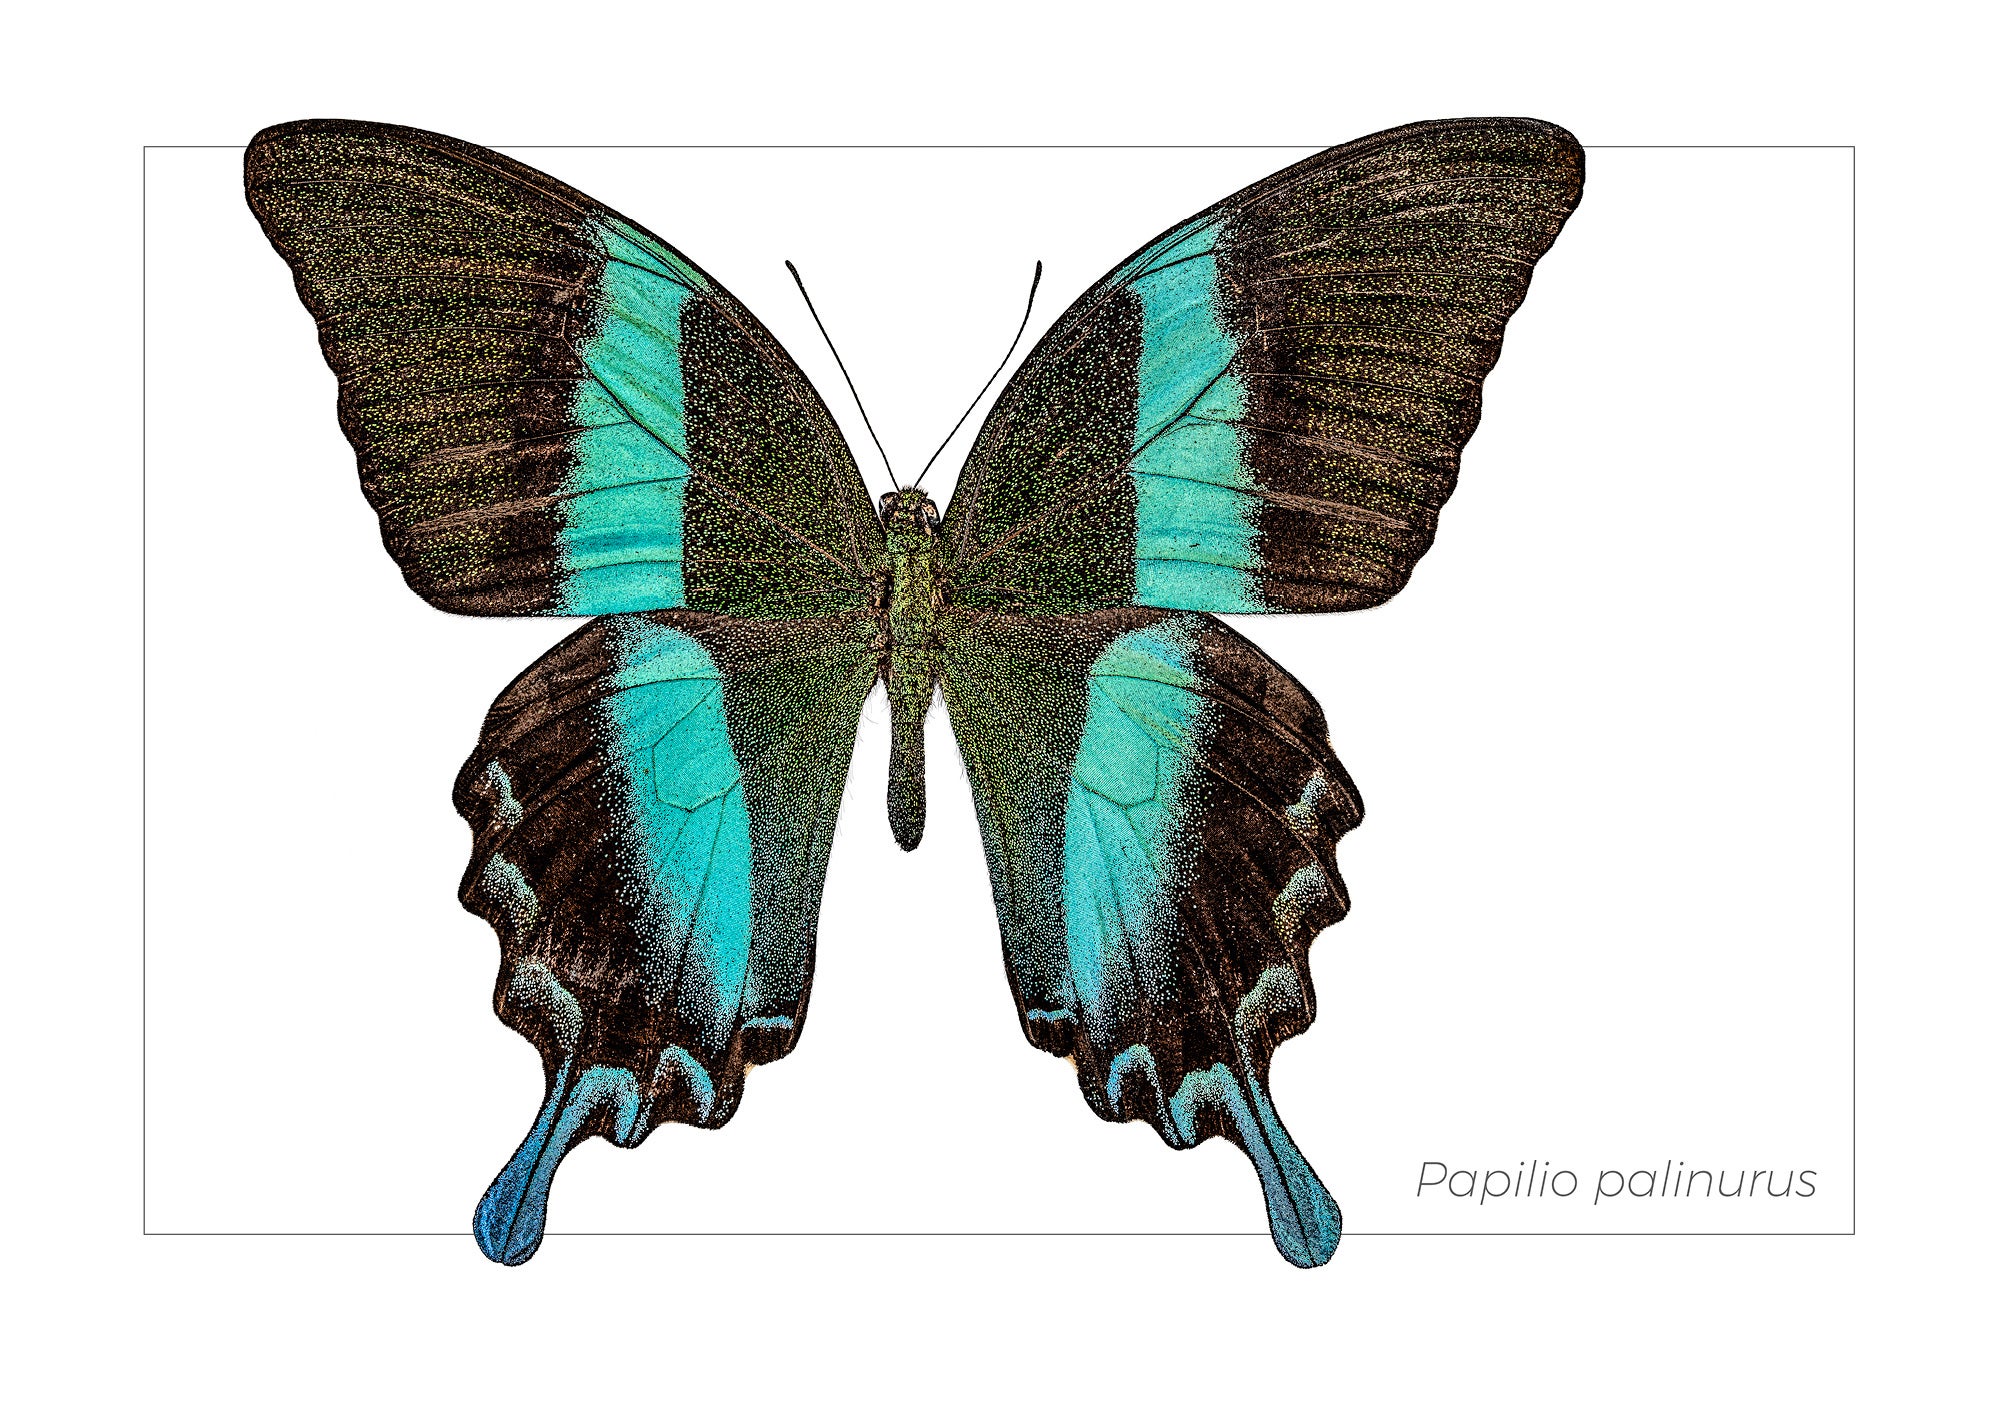 Papilio palinurus  2018 Photograph by David Garnick (b. 1955) Courtesy of the artist R2019.0409.014